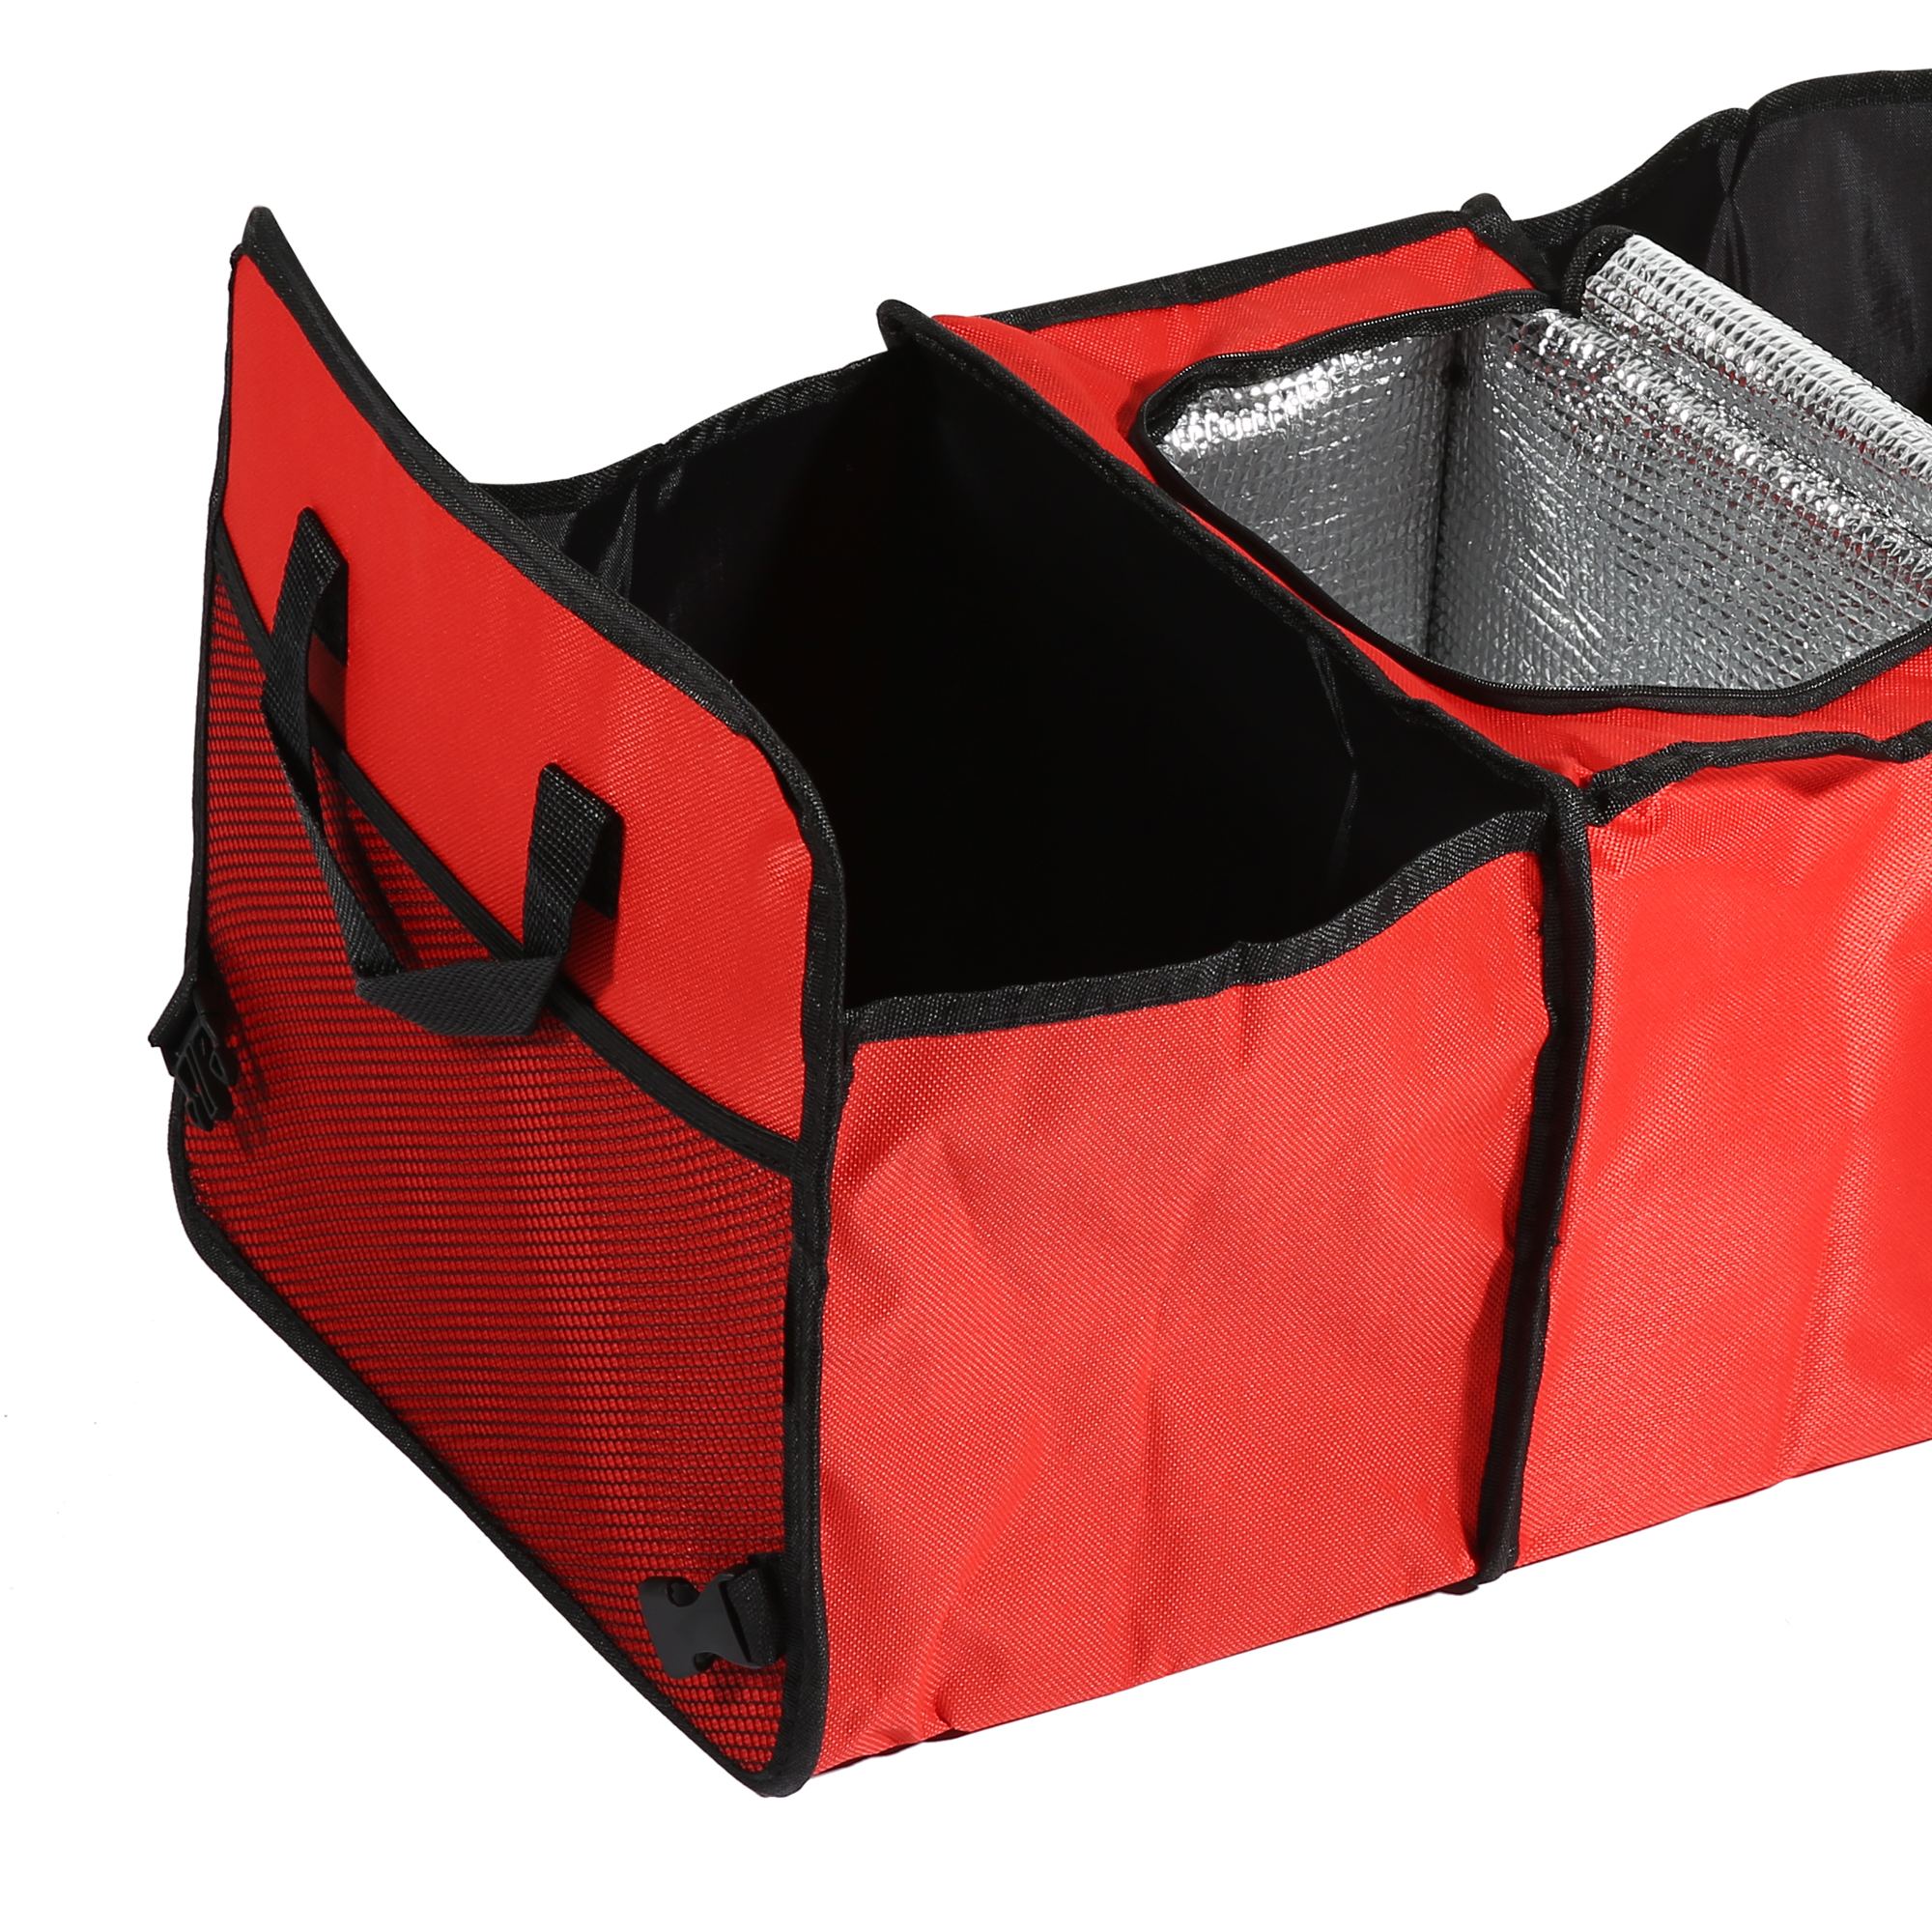 Unique Bargains 1pcs Car Trunk Foldable Organizer Mesh Storage Pockets Thermal Insulation Red